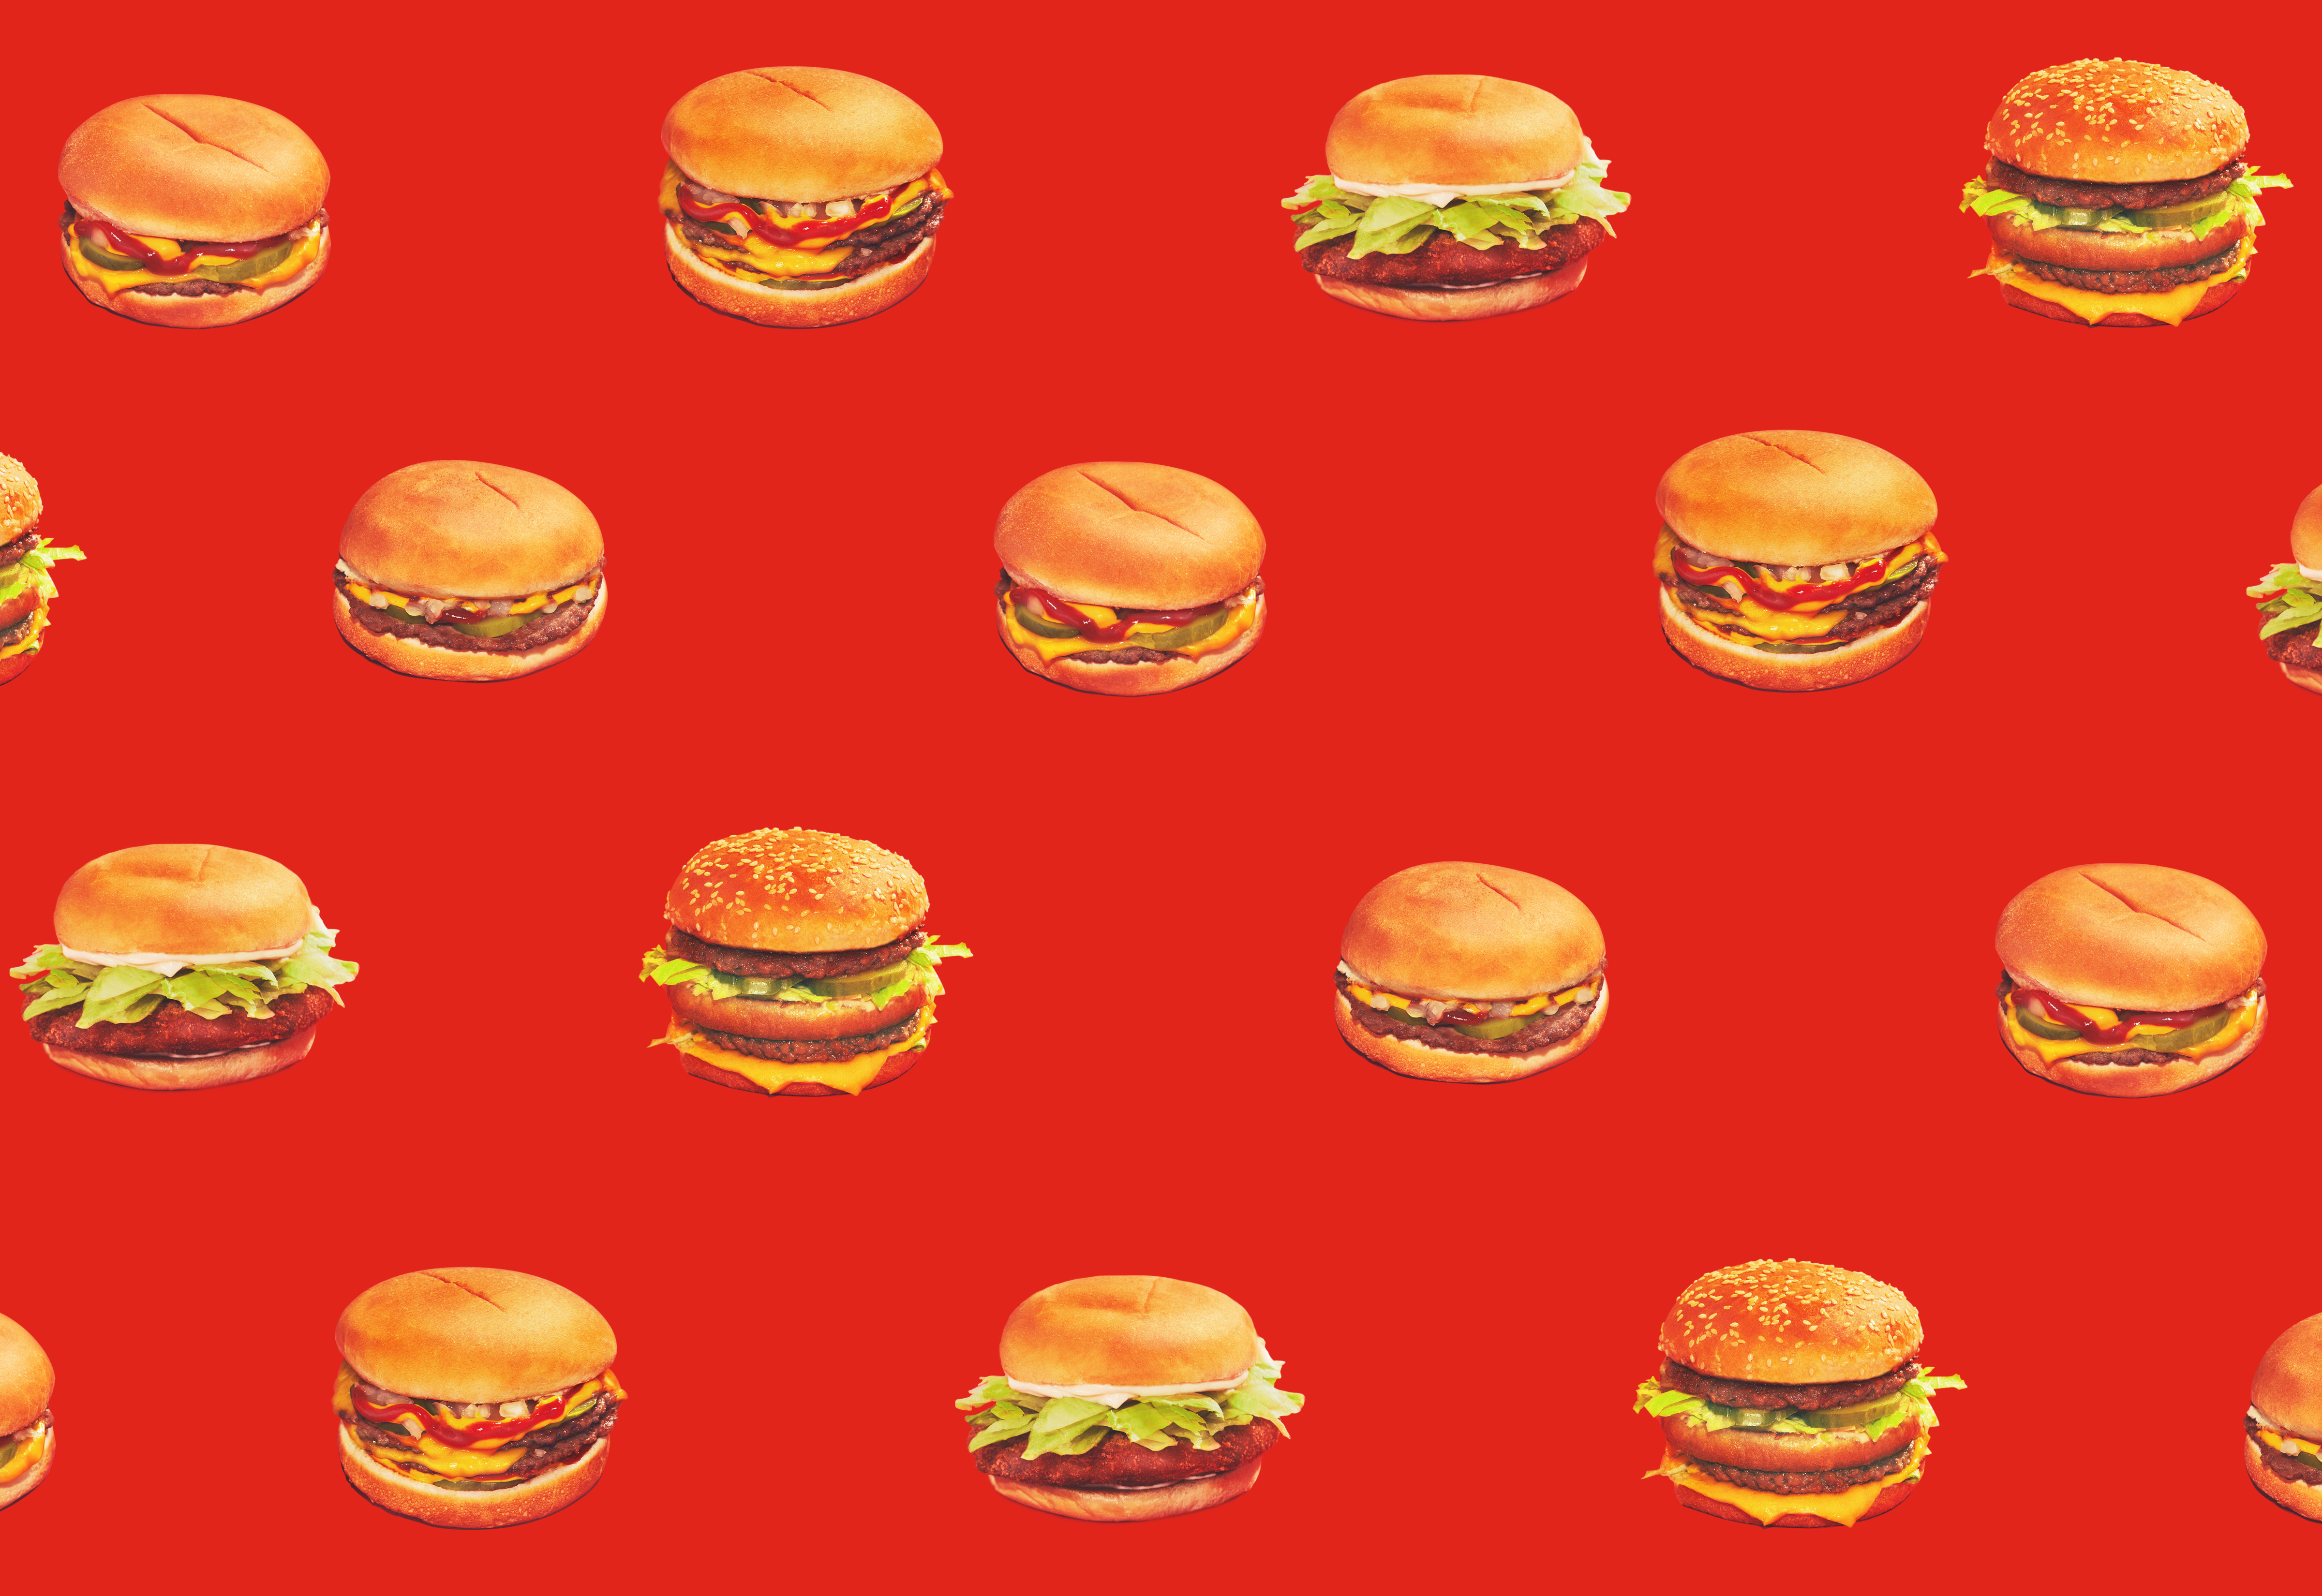 MrCharlies-multiburgers.jpg